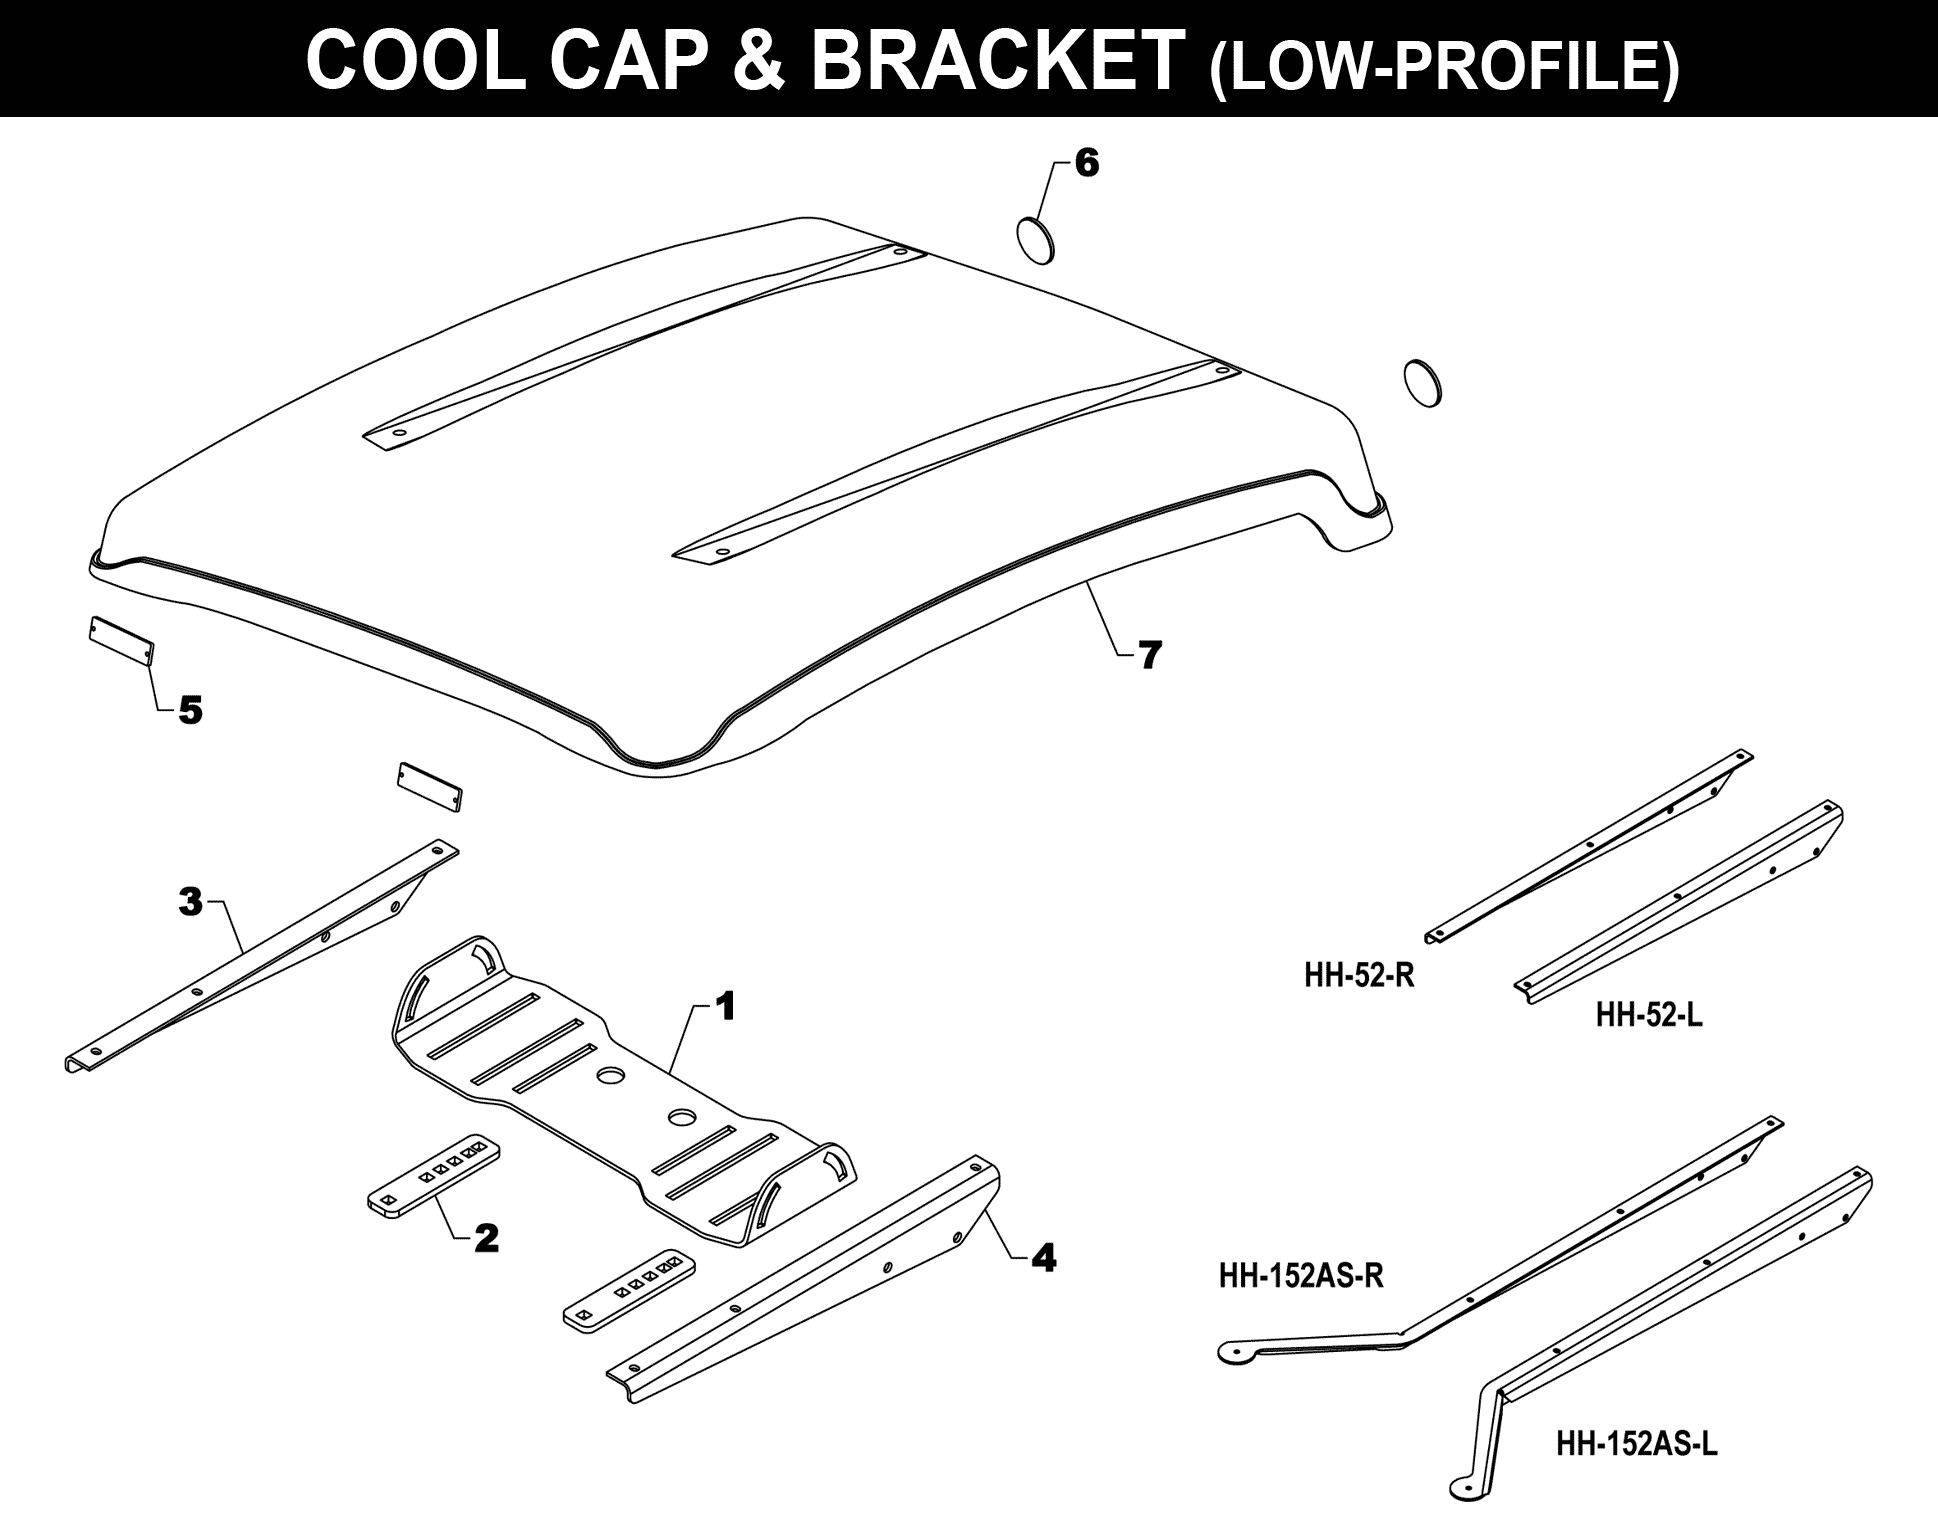 Cool Cap (Low Profile)